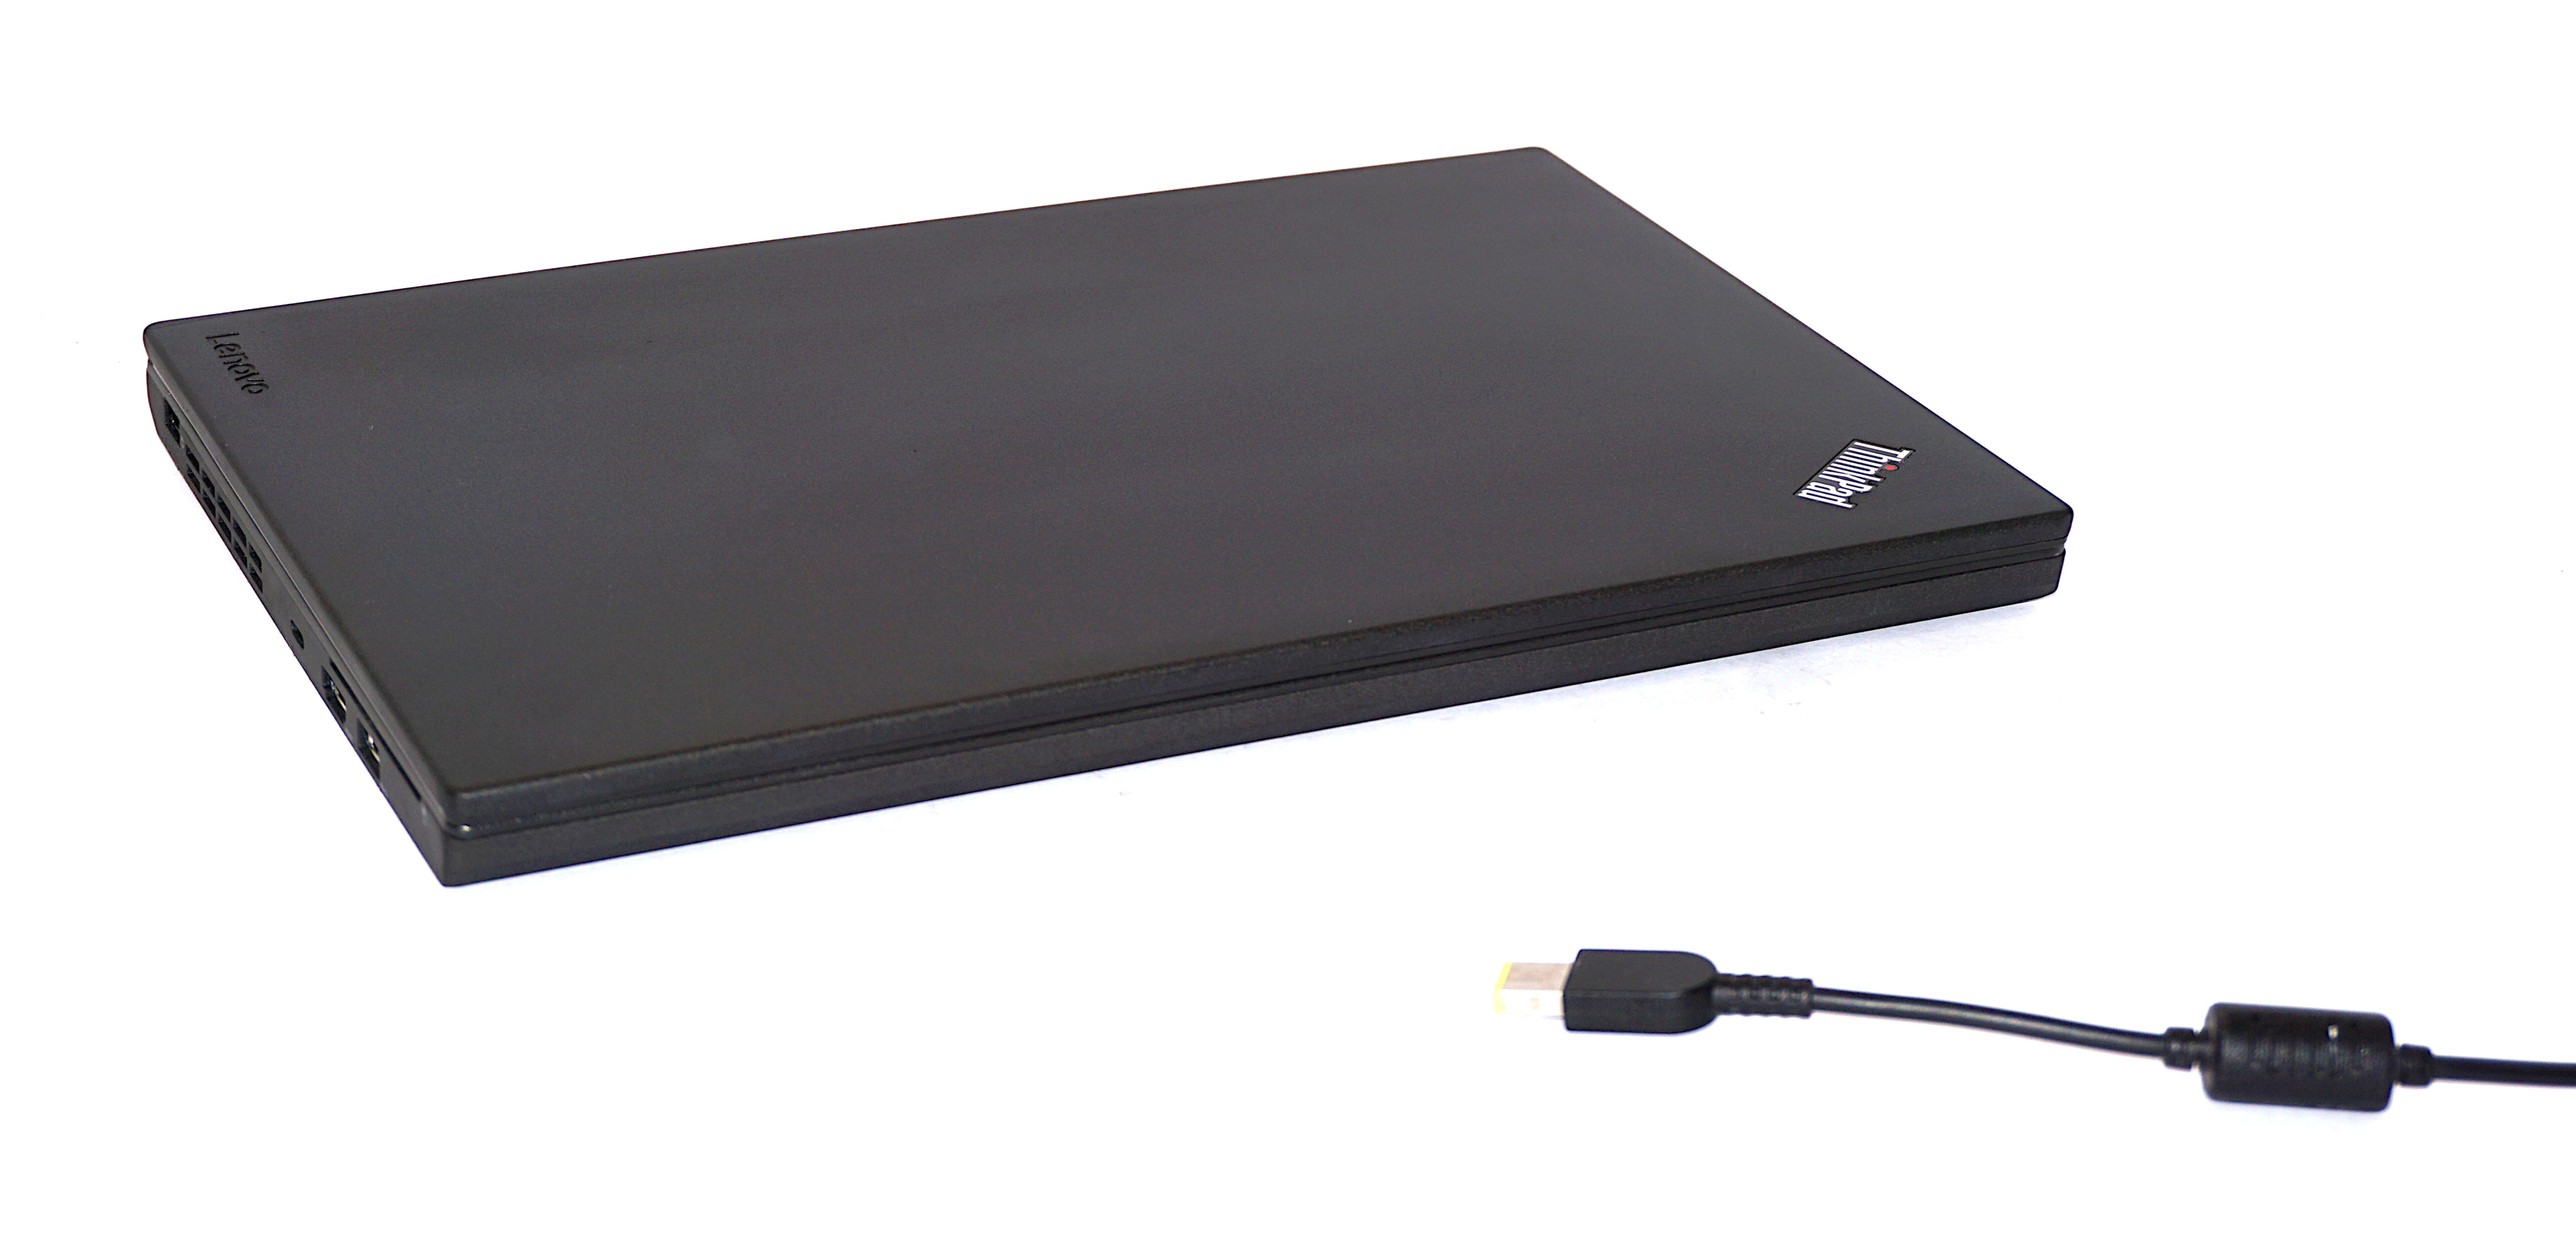 Lenovo ThinkPad X270 Laptop, 12.5" Intel Core i7, 8GB RAM, 256GB SSD